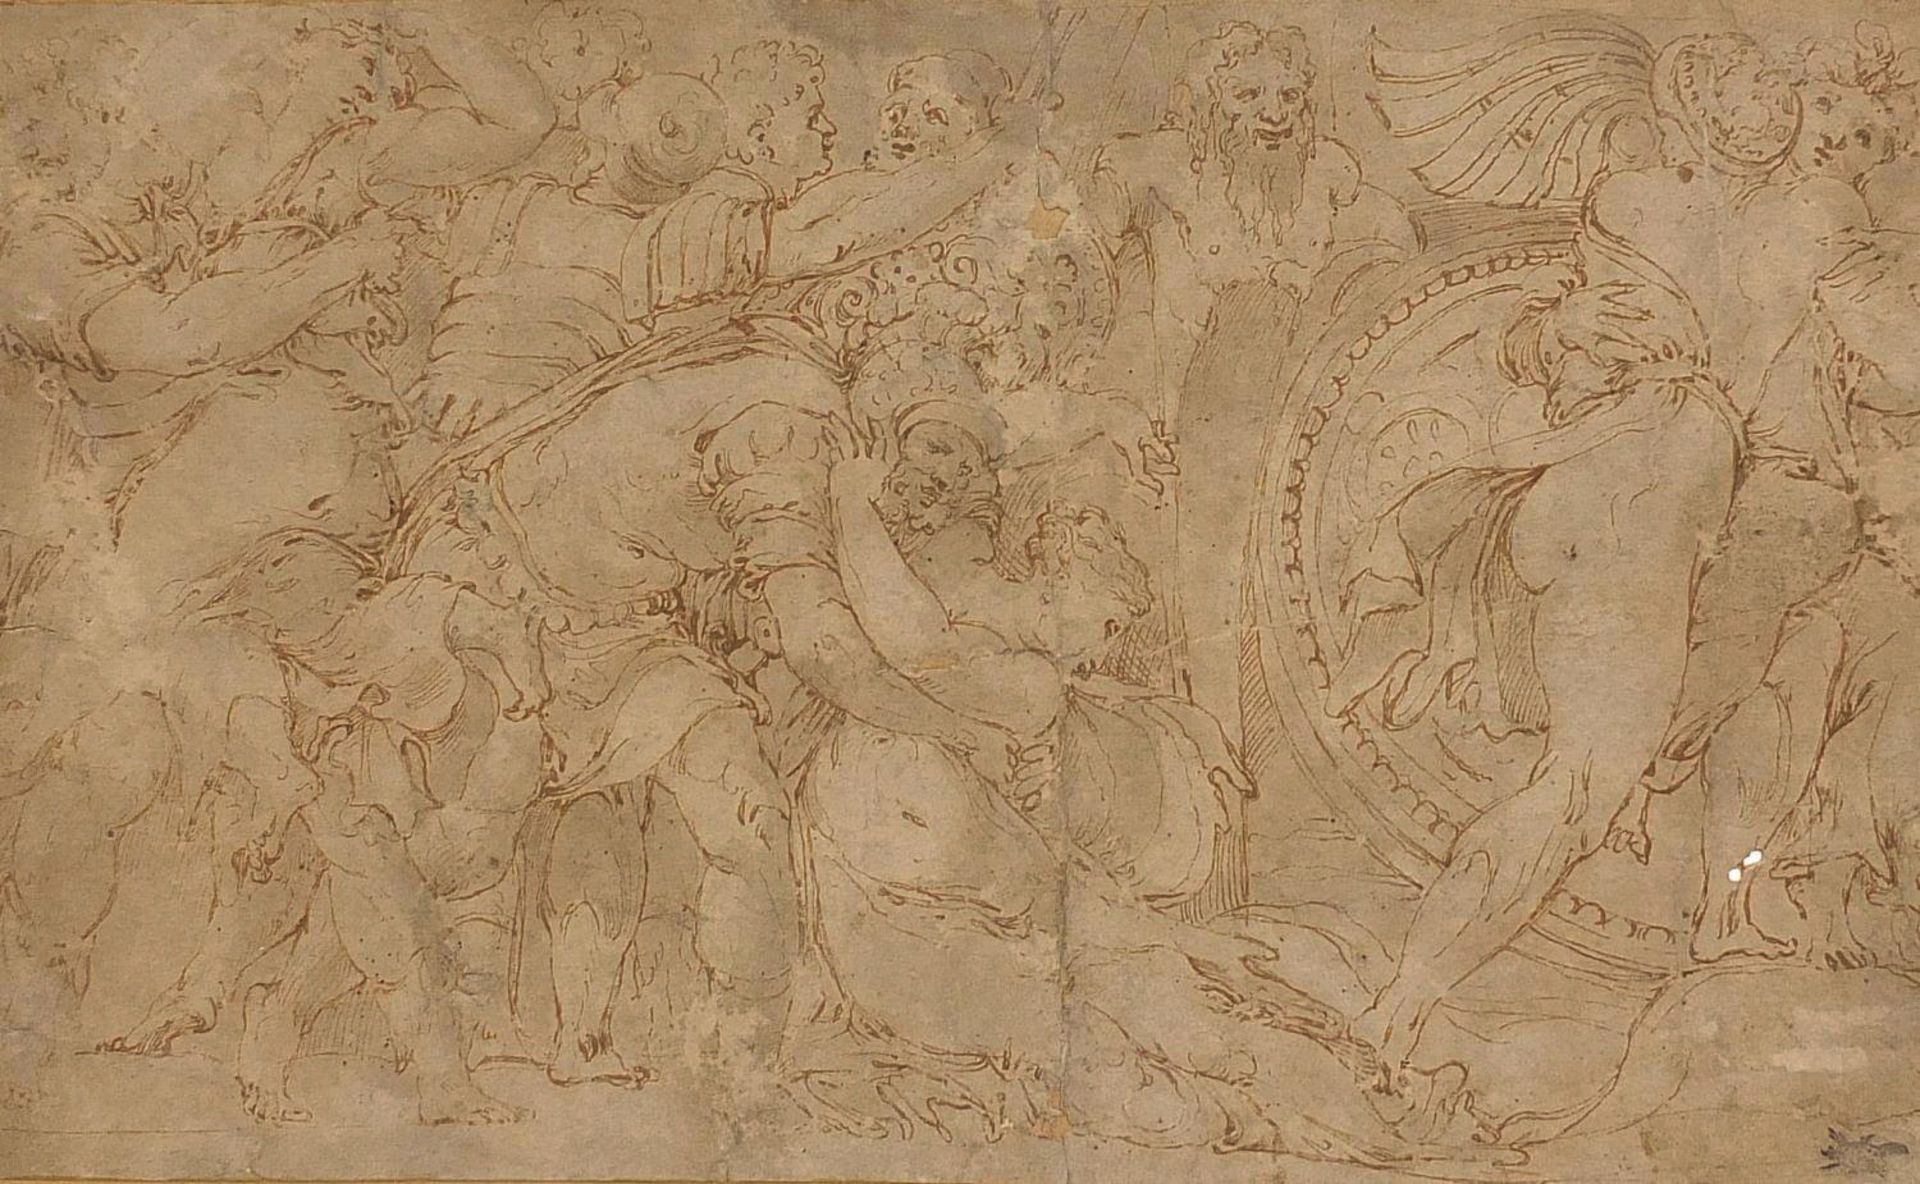 Manner of Polidoro da Caravaggio - The Rape of the Sabine Woman, antique Italian Old Master pen